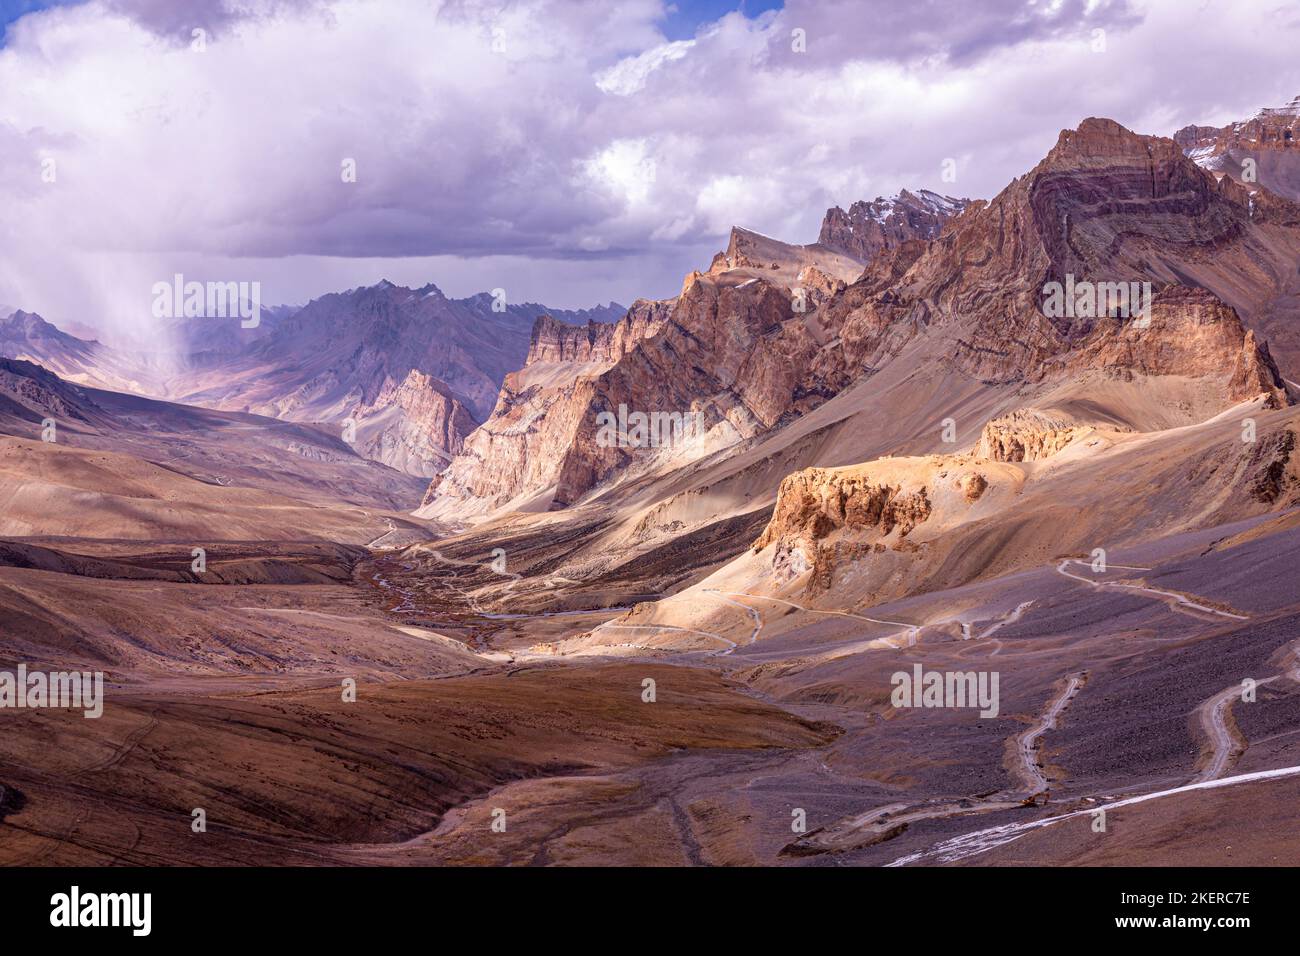 Landscape in the area of Photoksar, Ladakh, India Stock Photo